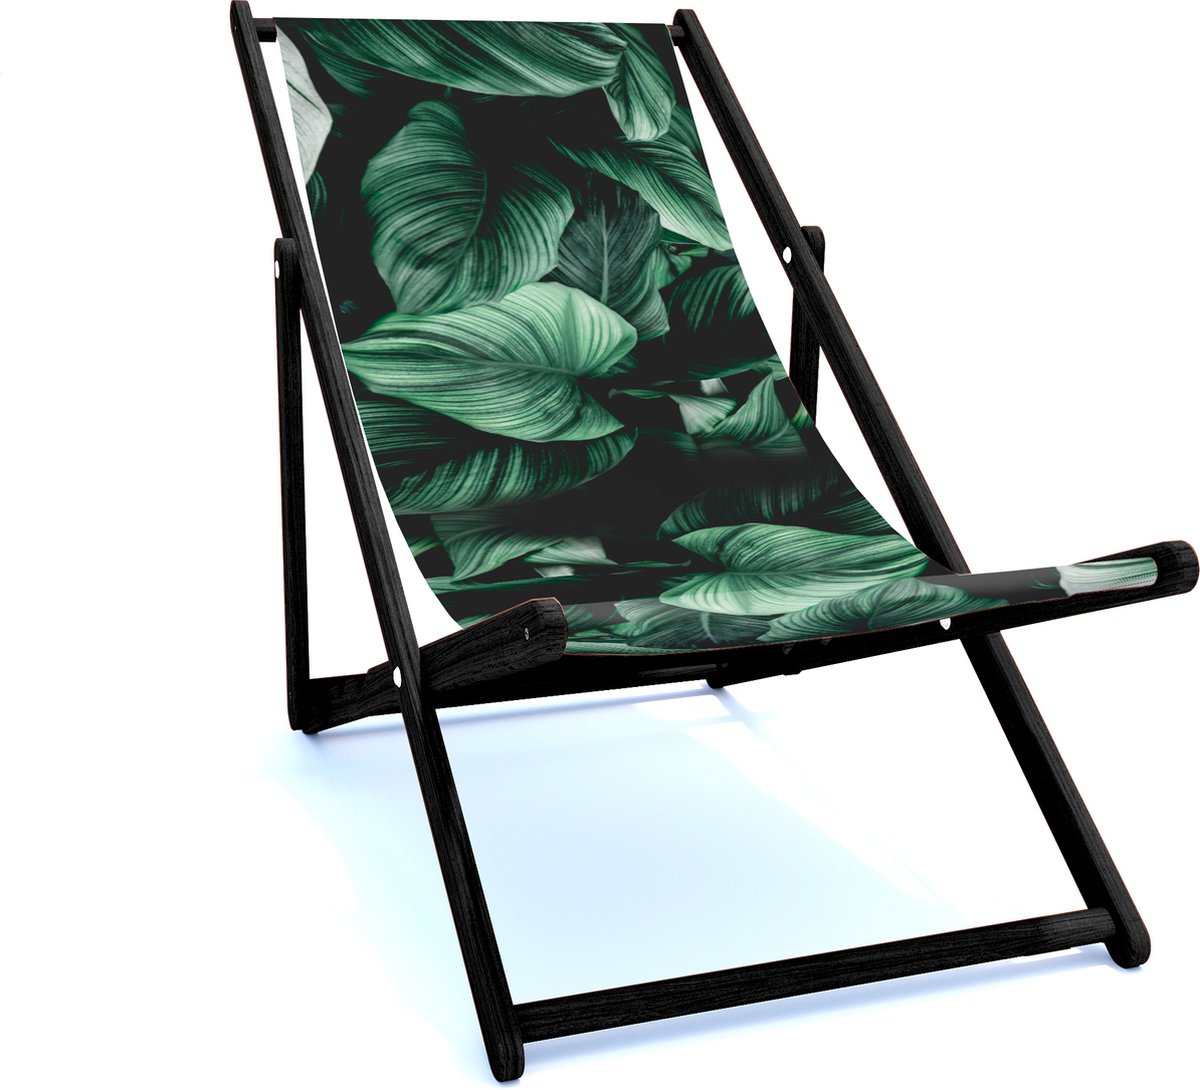 Holtaz Strandstoel Hout Inklapbaar Comfortabele Zonnebed Ligbed met verstelbare Lighoogte met stoffen Bladeren zwart houten frame